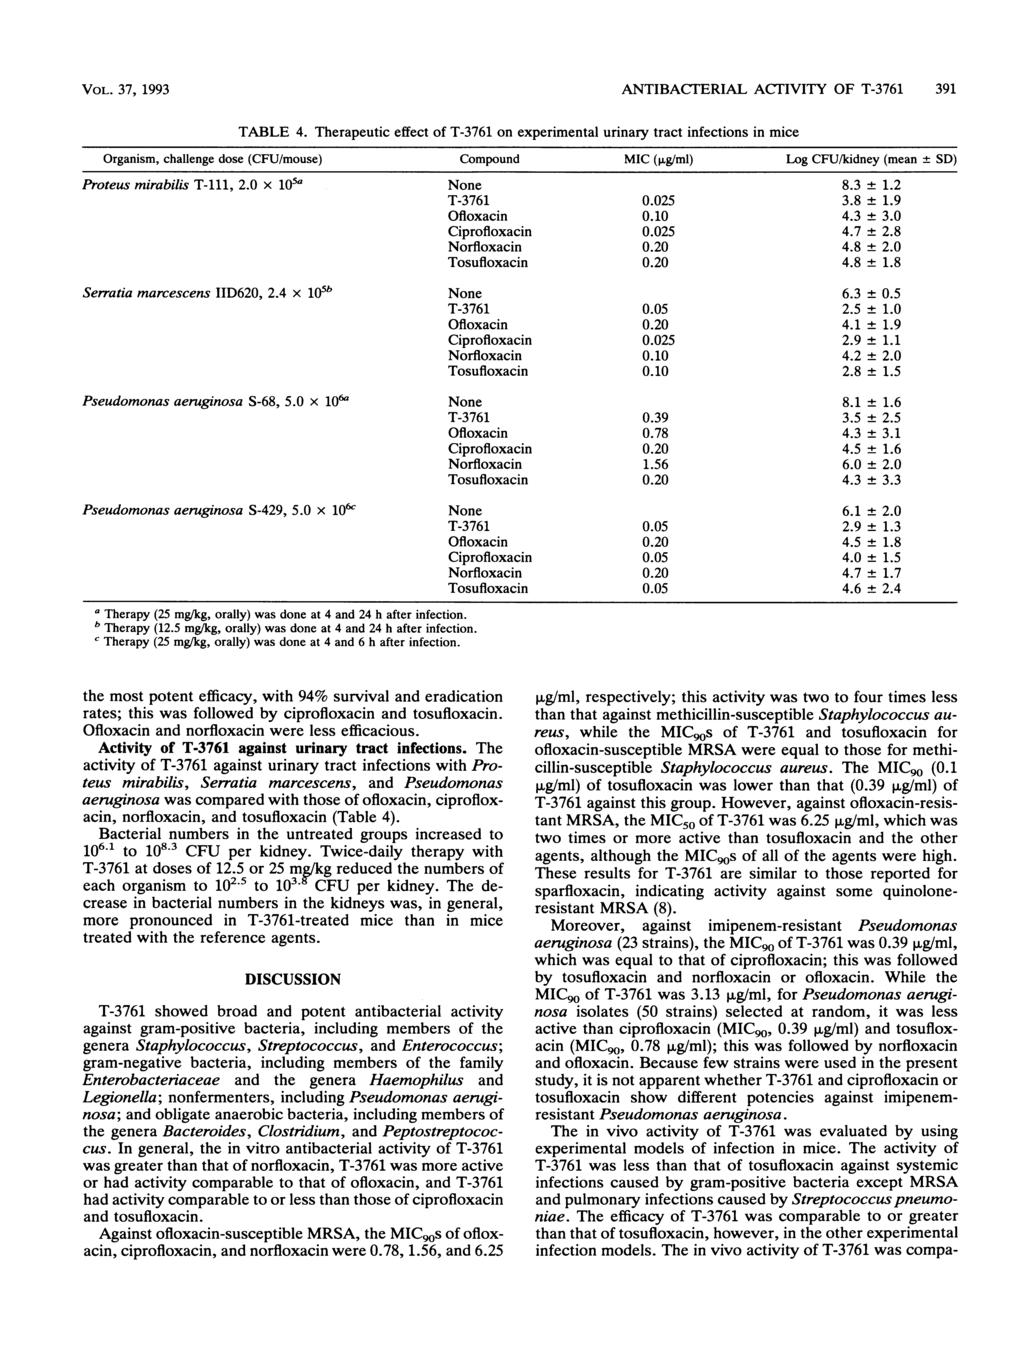 VOL. 37, 1993 ANTIBACTERIAL ACTIVITY OF 391 TABLE 4.